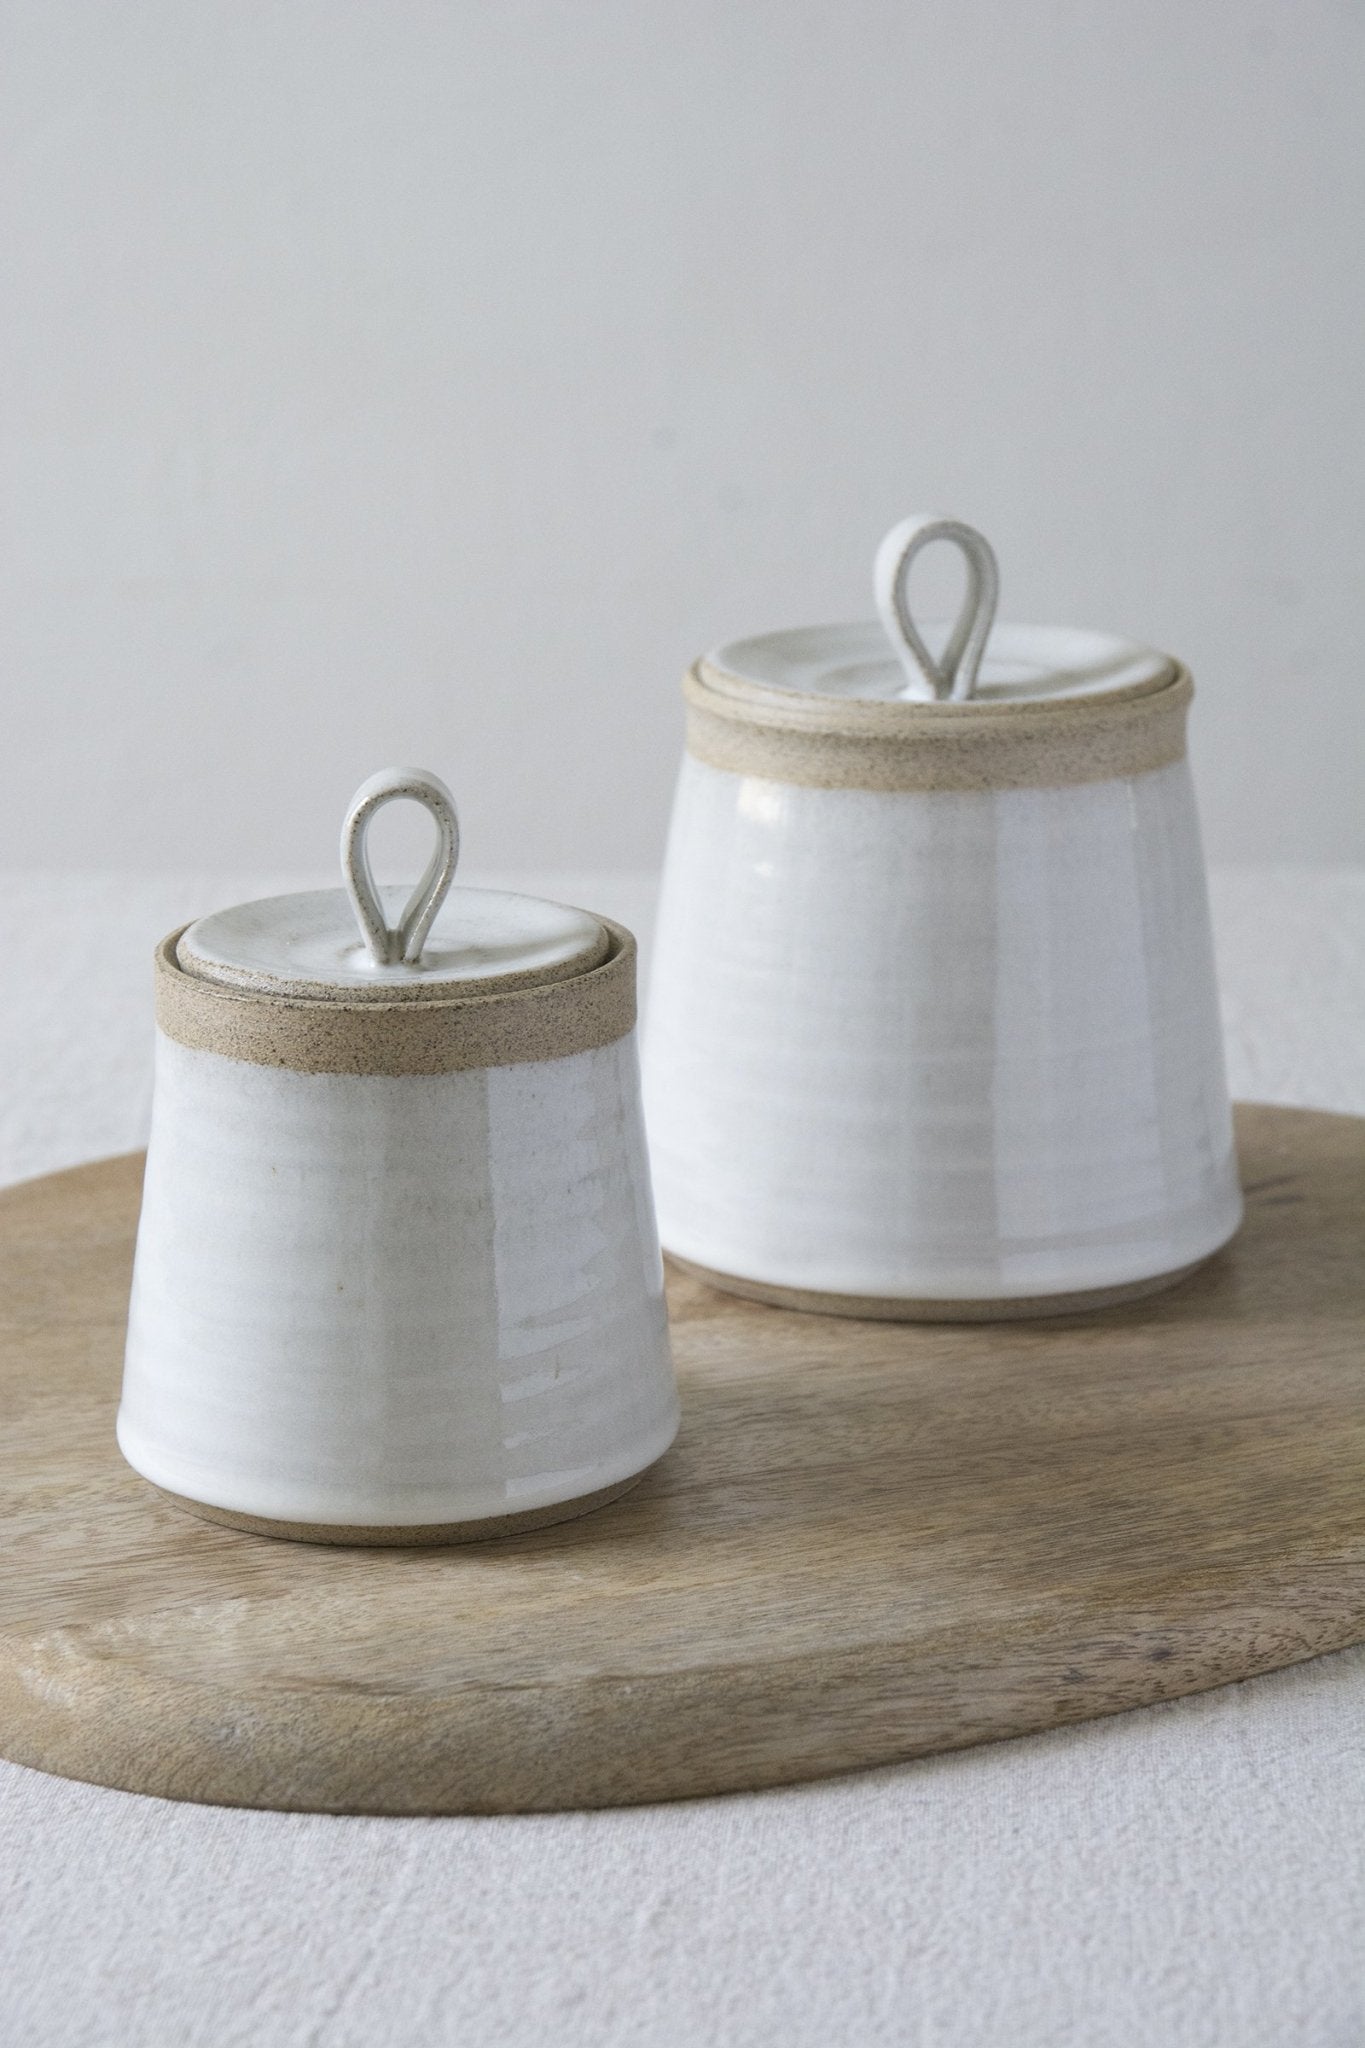 Two Tone Ceramic Jar